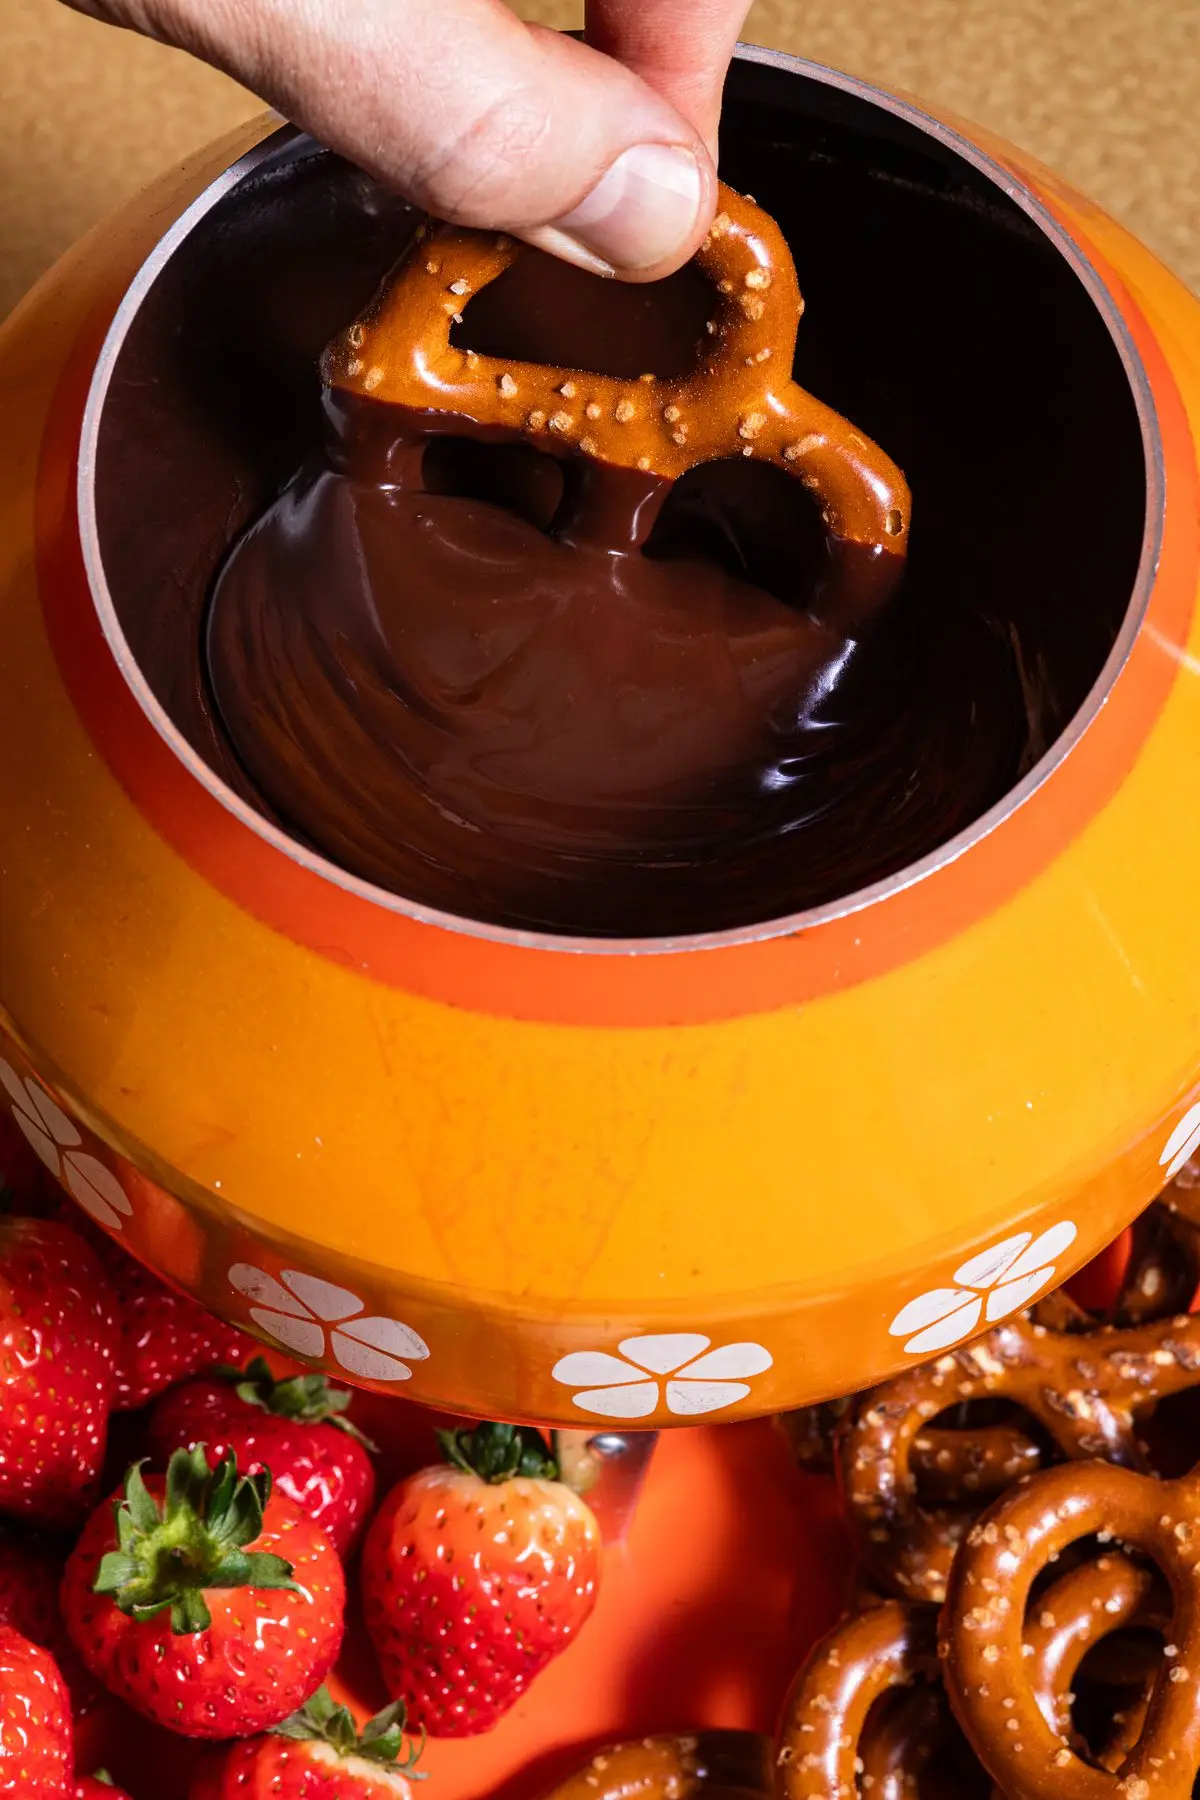 Hand holding pretzel dips it into a pot of chocolate fondue.